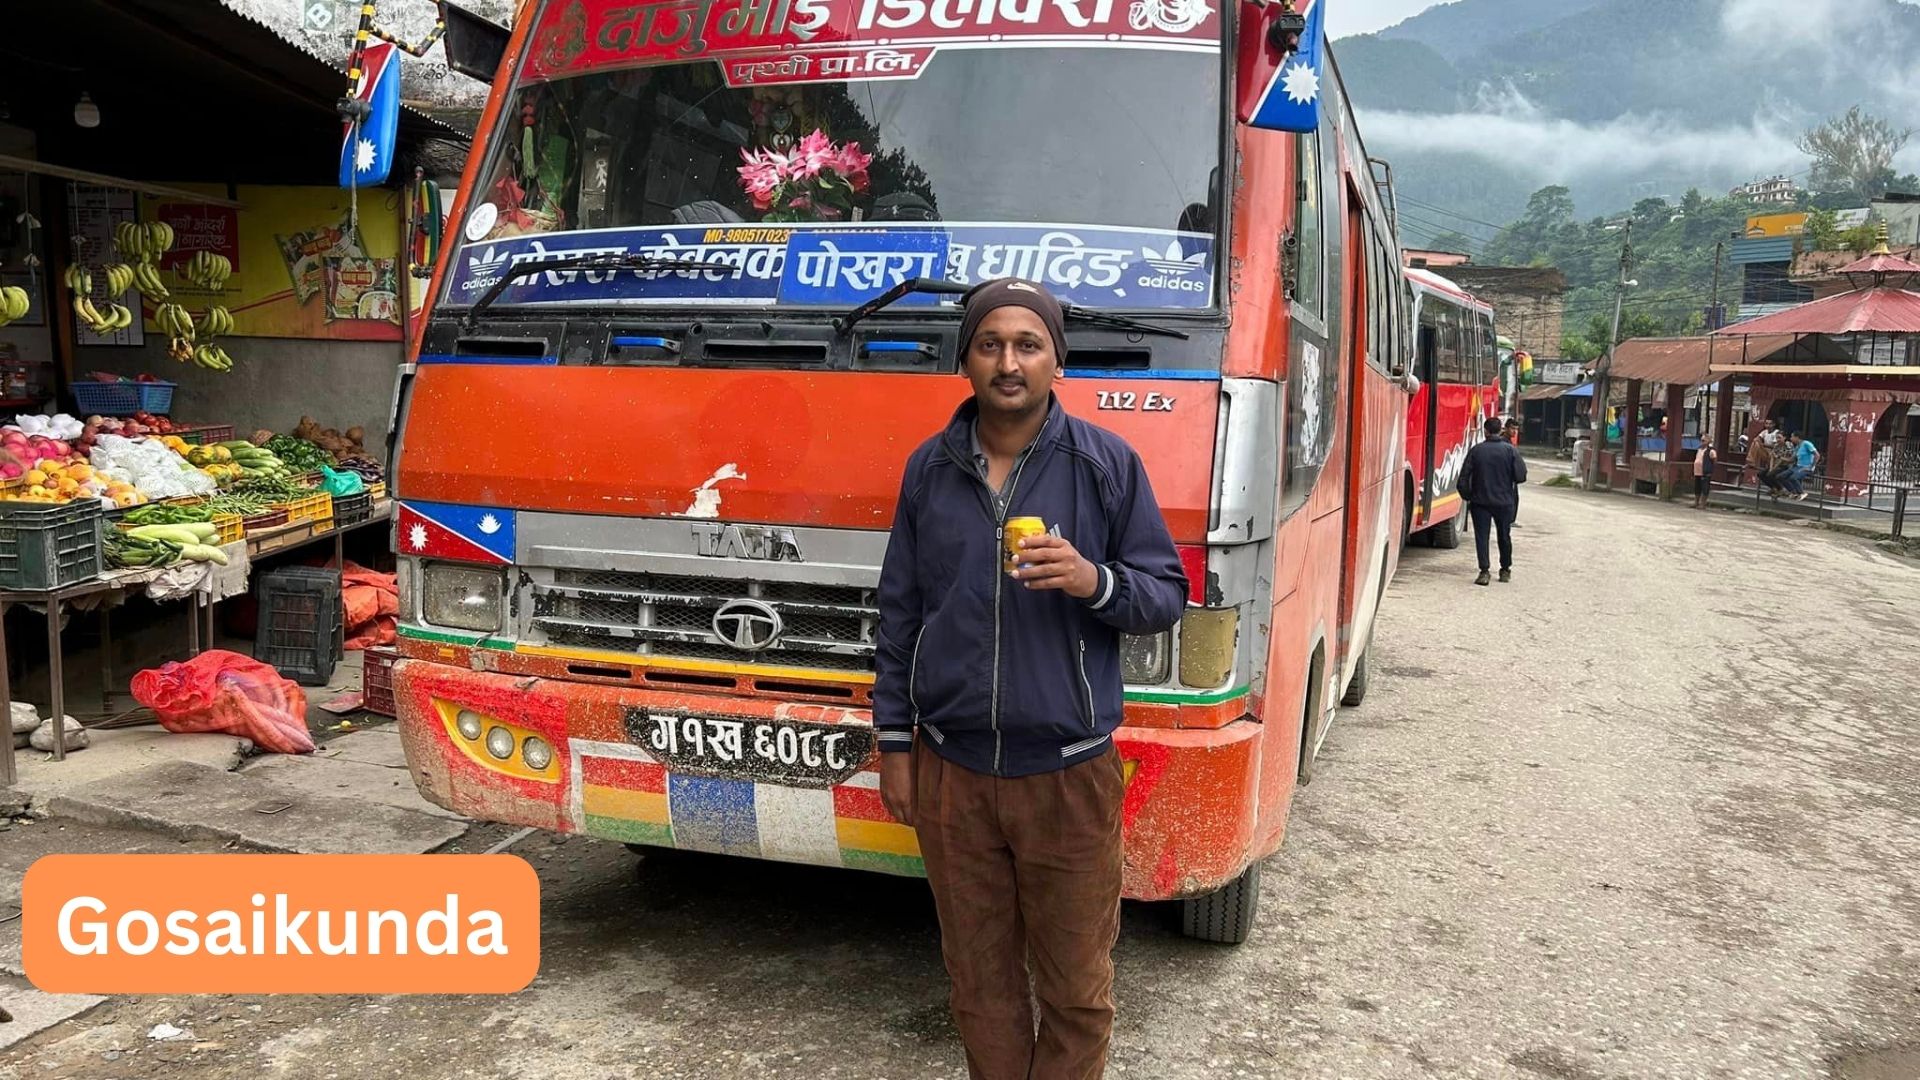 Why I Am Going Gosaikunda Trek in Nepal